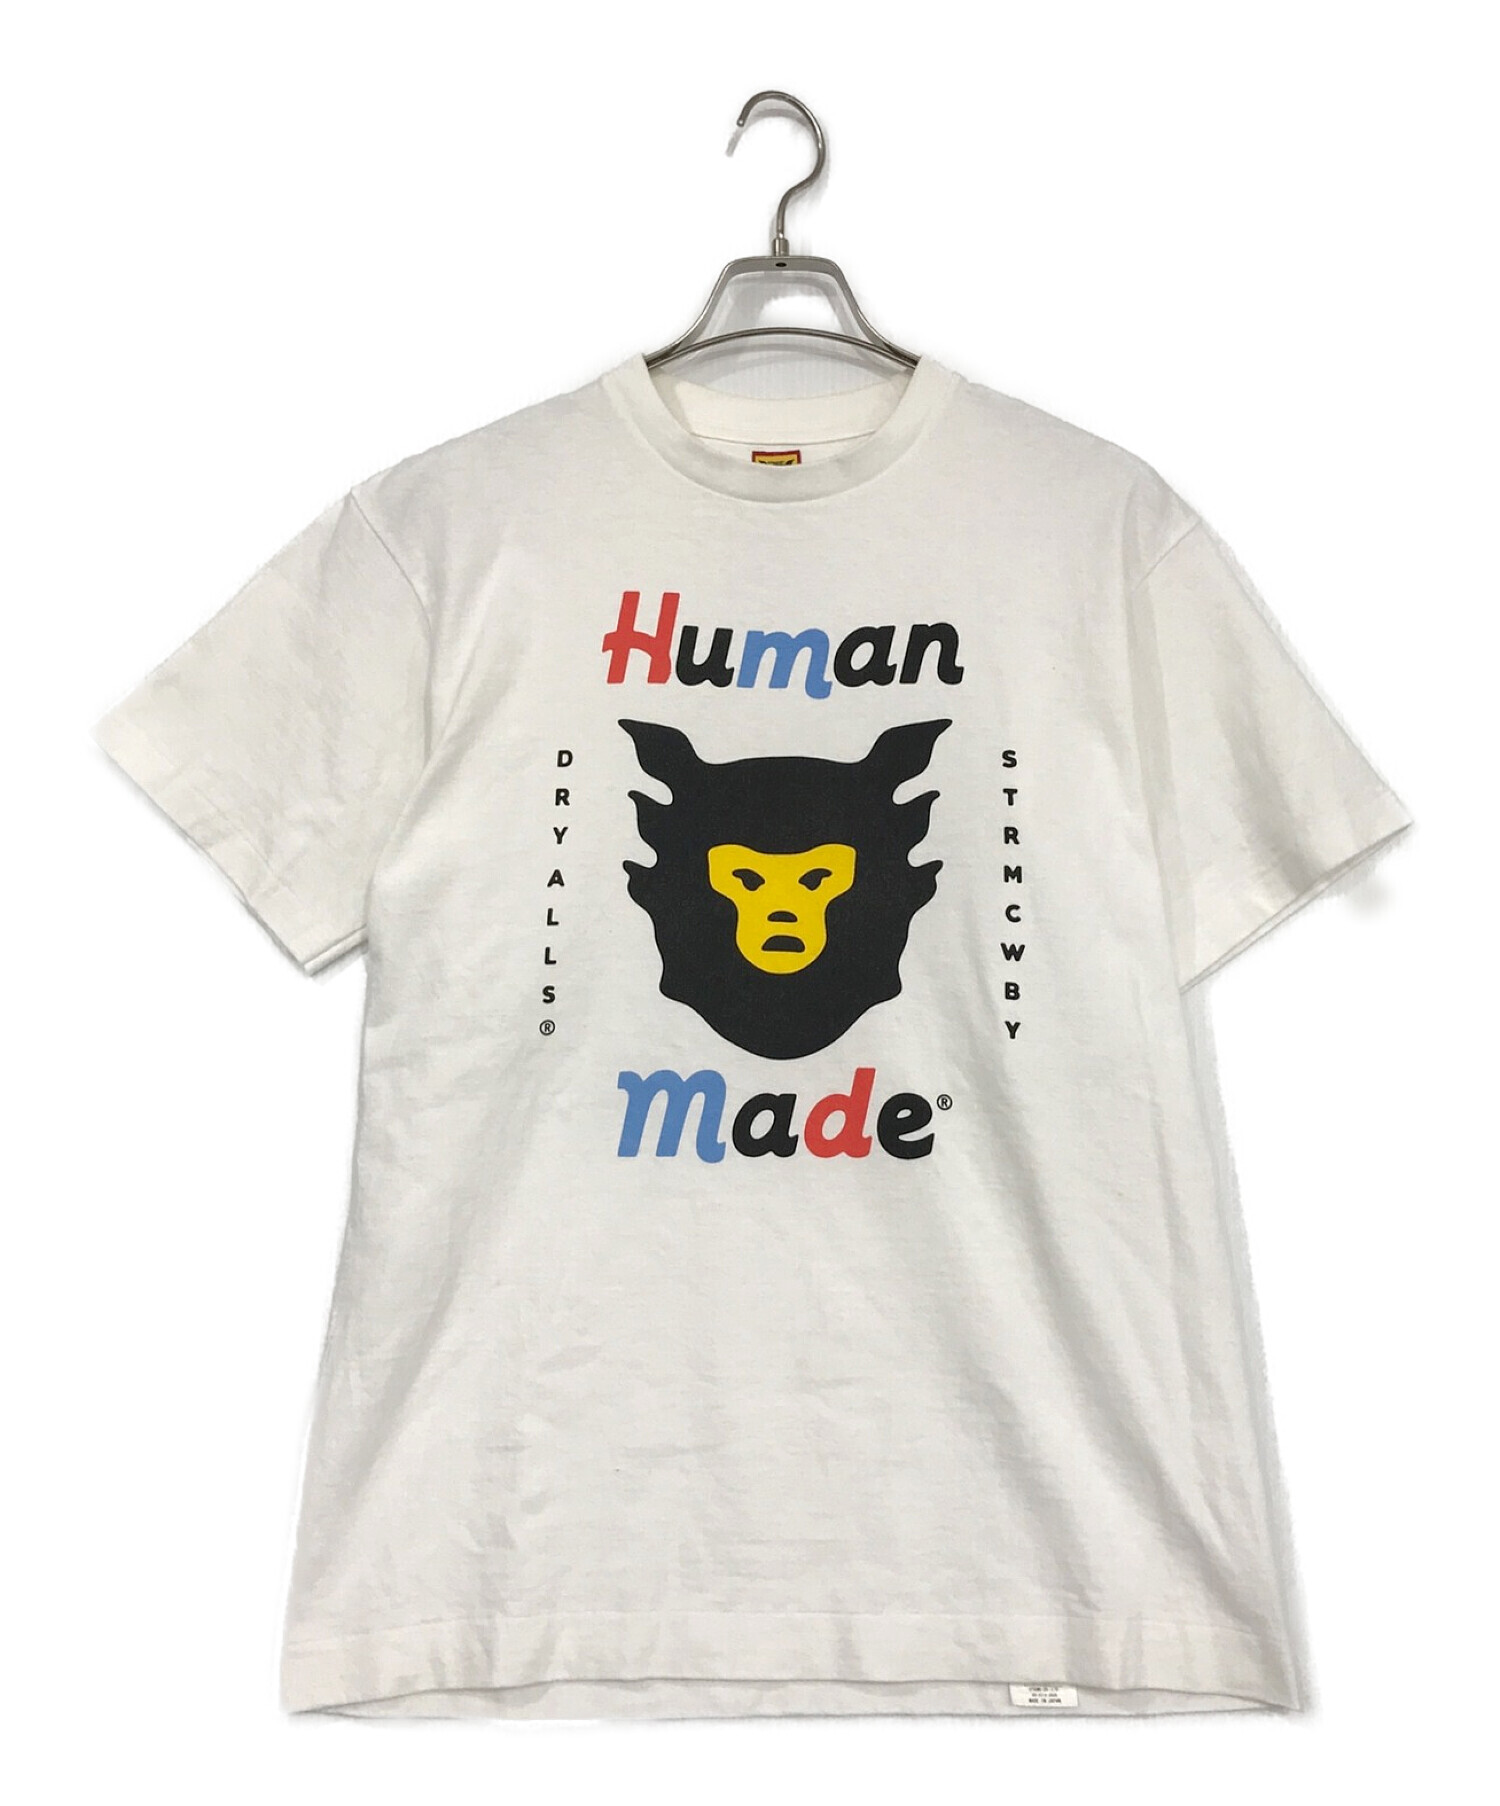 humanmade プリントtシャツ